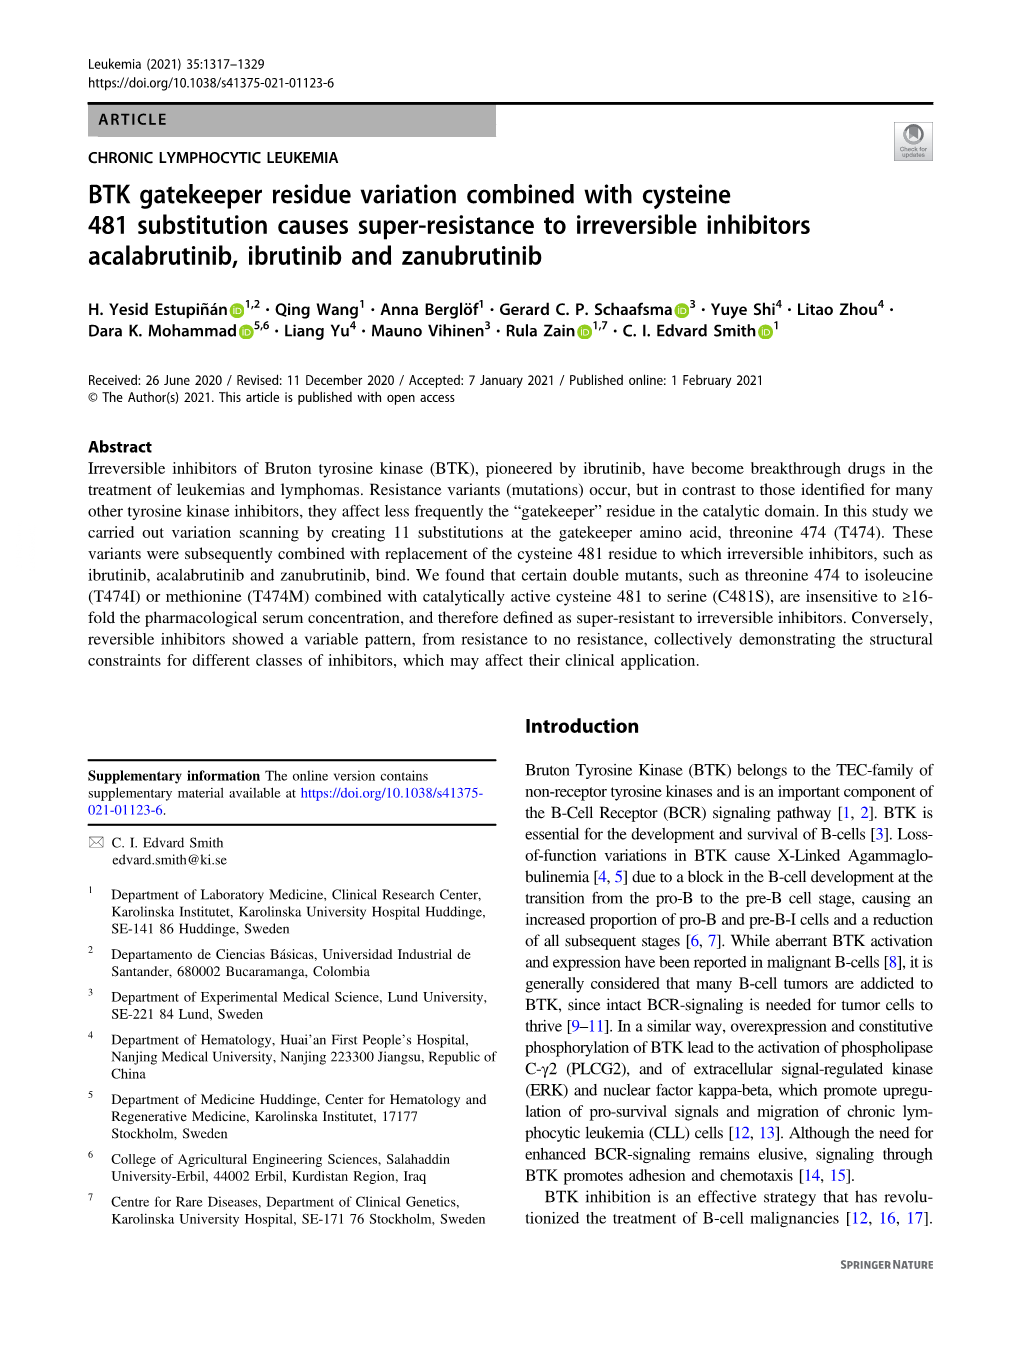 BTK Gatekeeper Residue Variation Combined with Cysteine 481 Substitution Causes Super-Resistance to Irreversible Inhibitors Acalabrutinib, Ibrutinib and Zanubrutinib